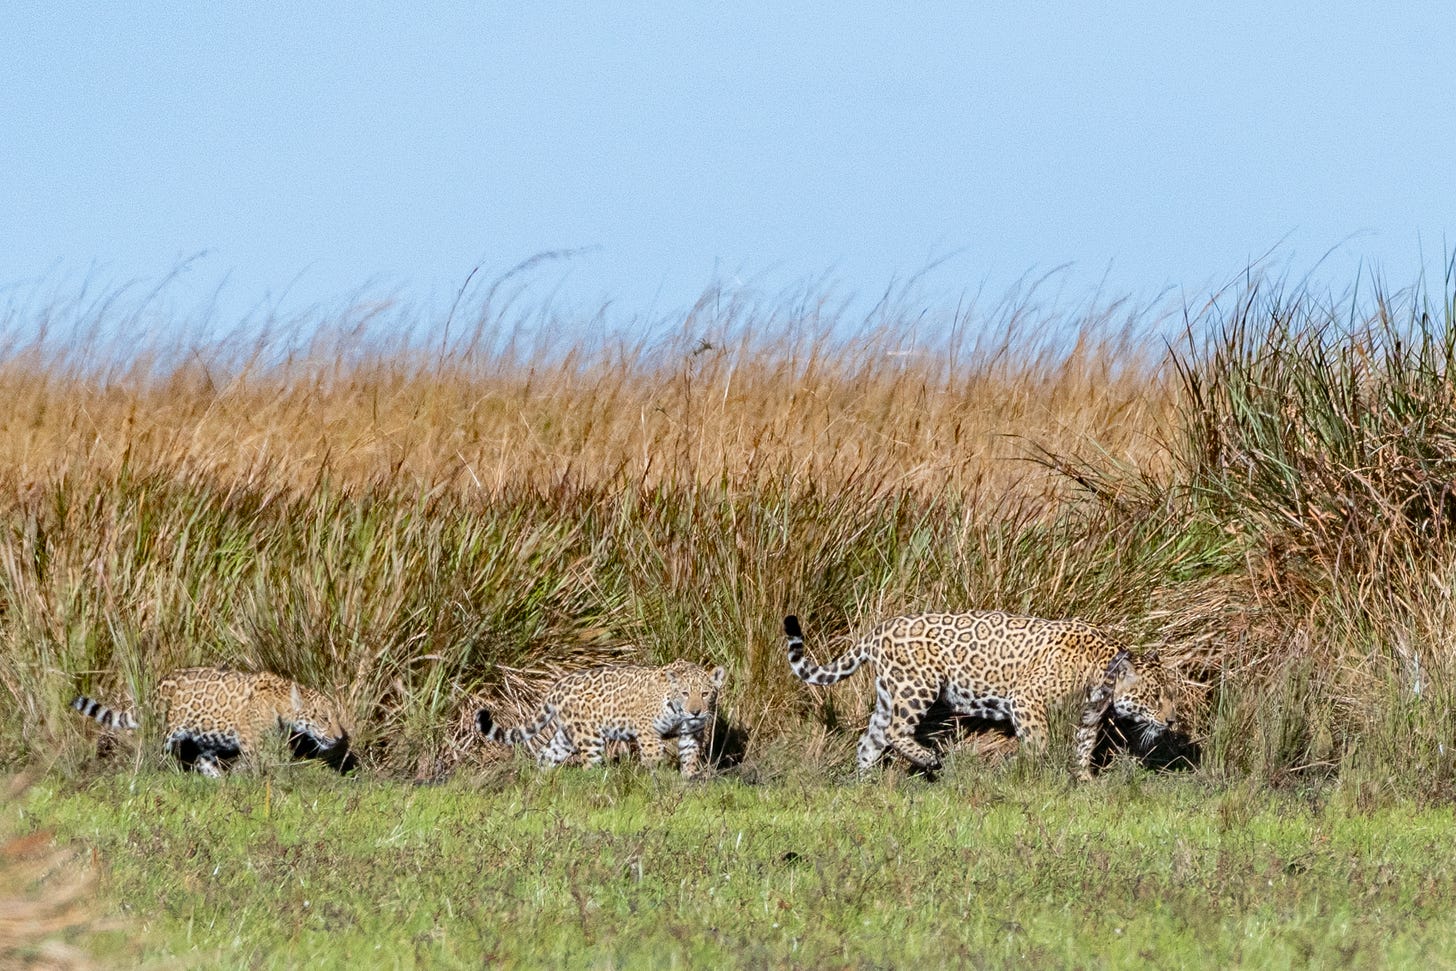 A jaguar and two cubs walking through high grass under a blue sky